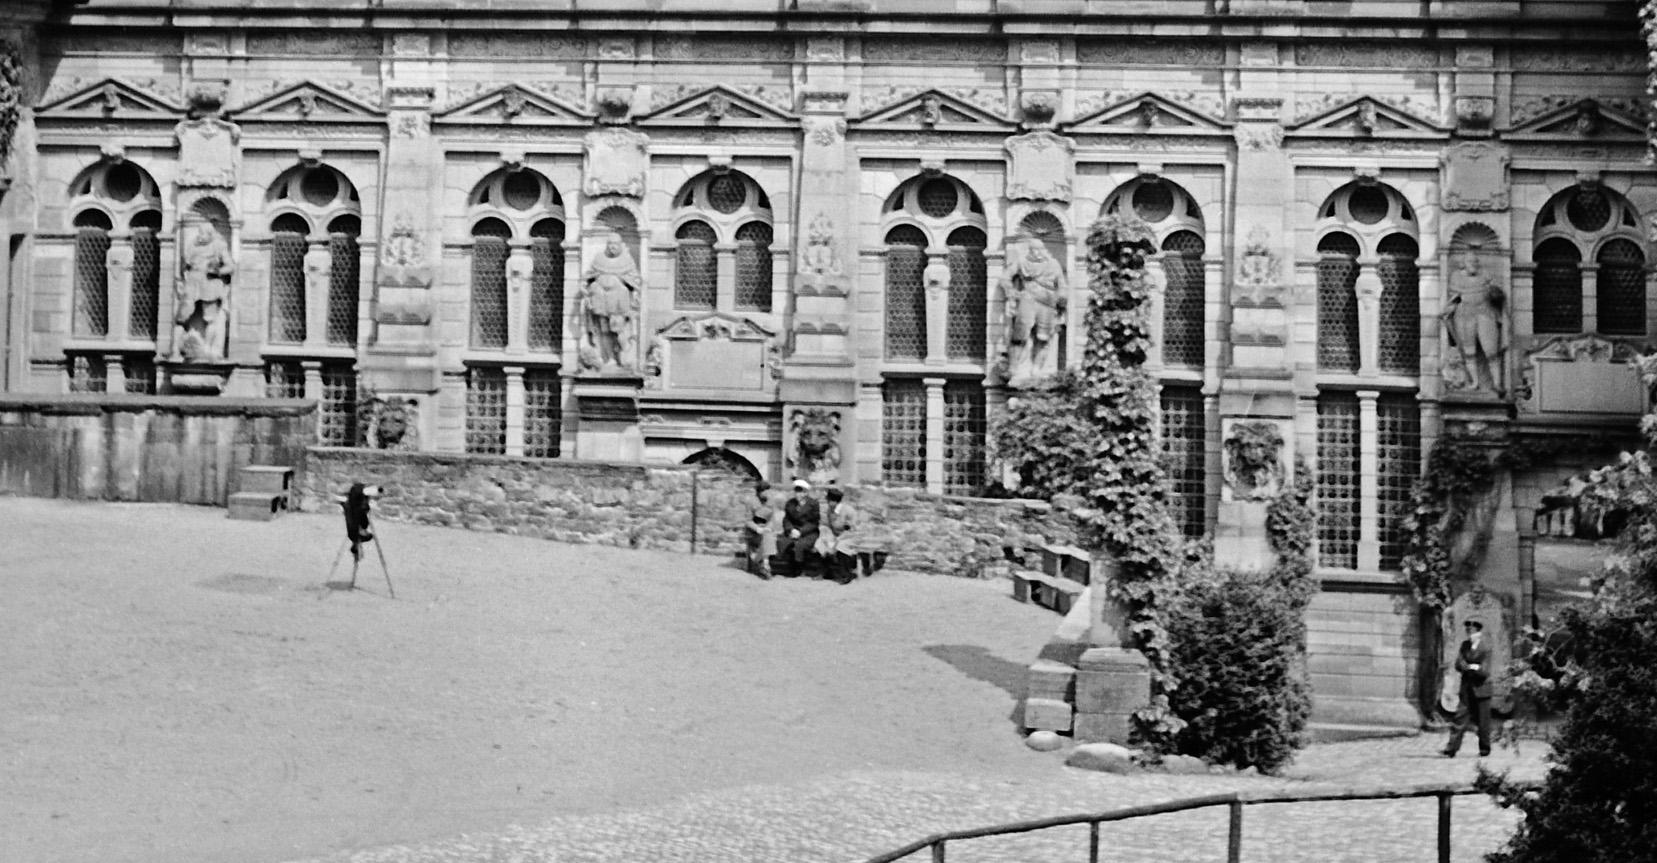 Friedrichsbau building at Castle, Heidelberg Germany 1938, Printed Later - Photograph by Karl Heinrich Lämmel